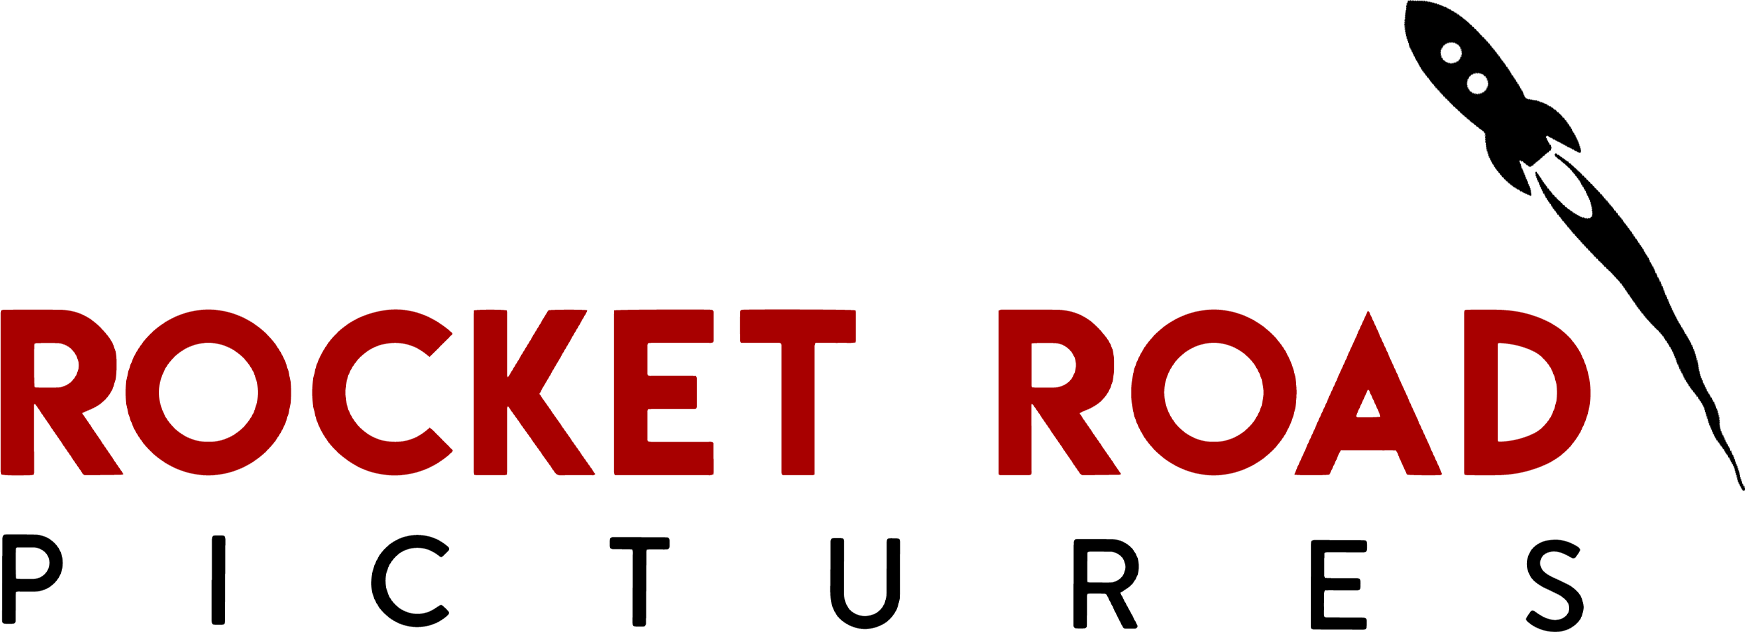 Rocket Road Pictures Logo